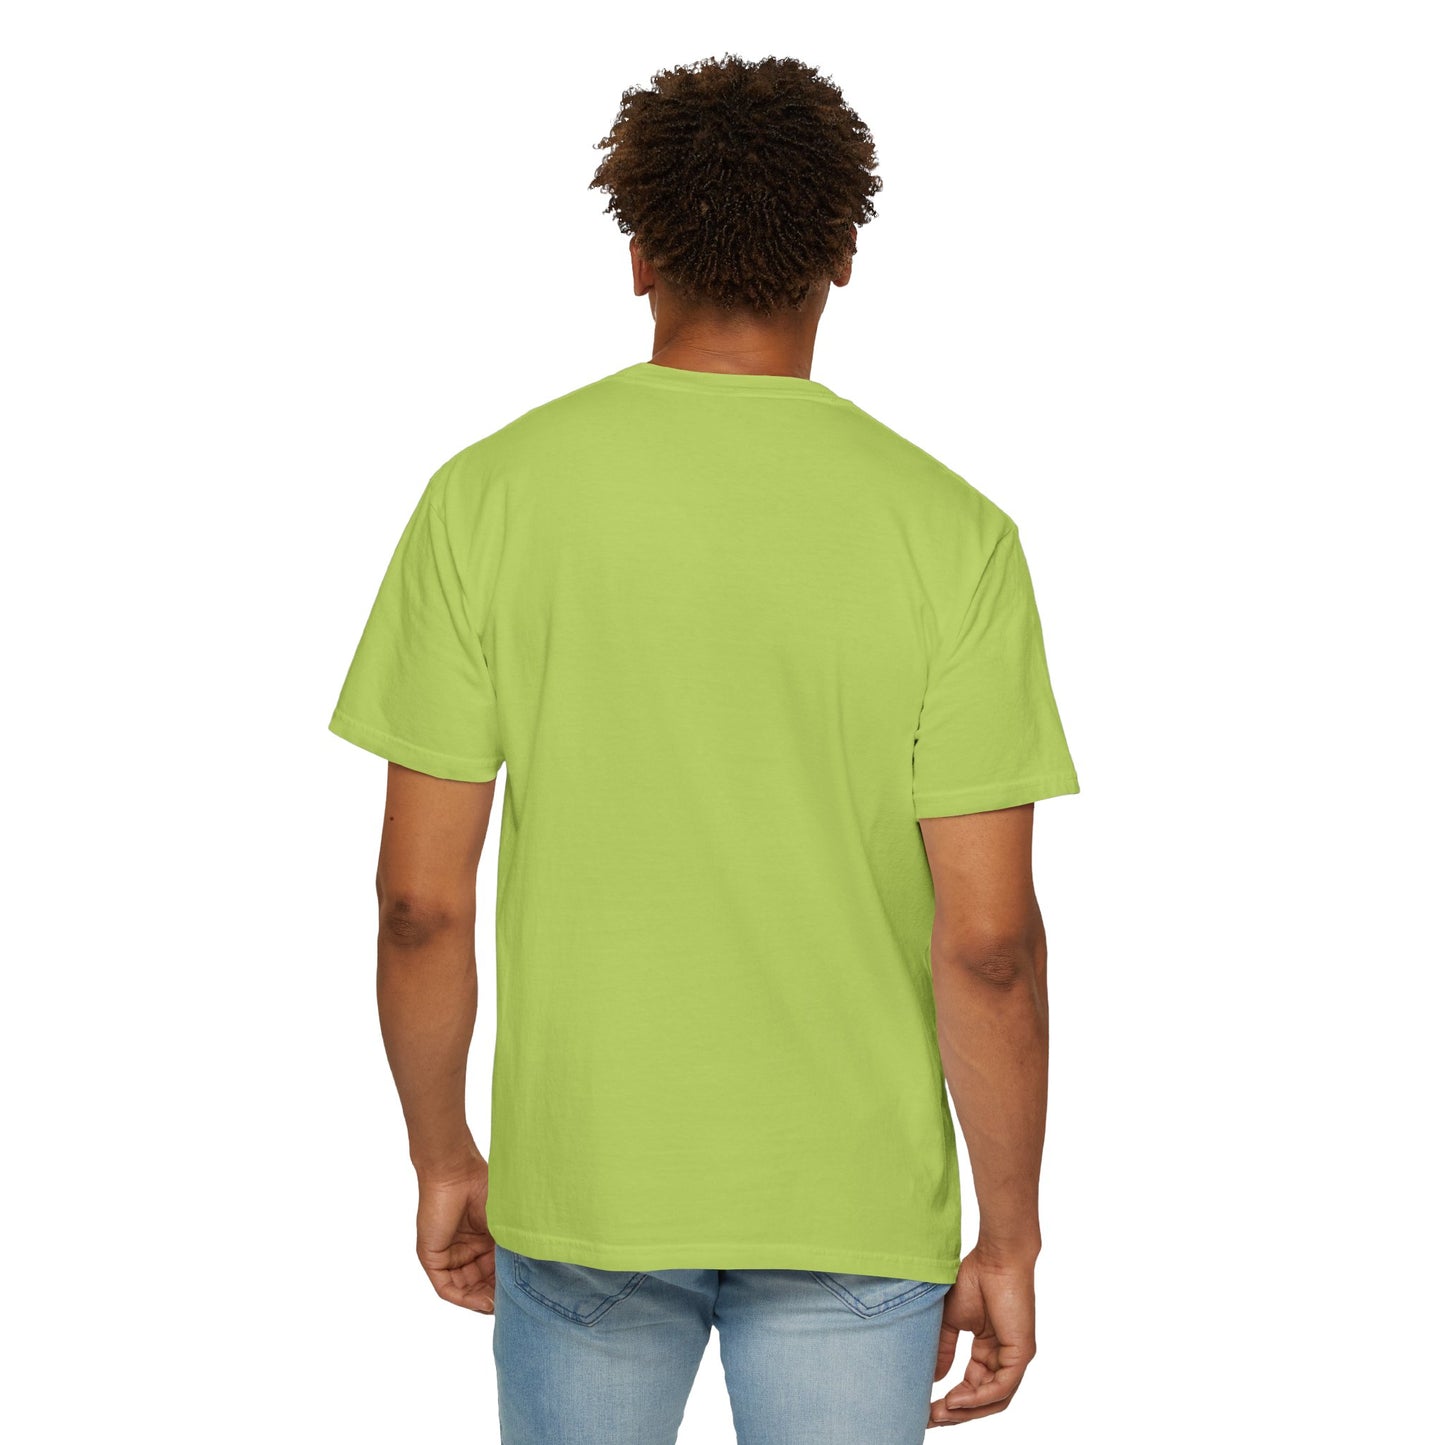 Unisex Comfort Colors T-shirt | Sea of Treachery